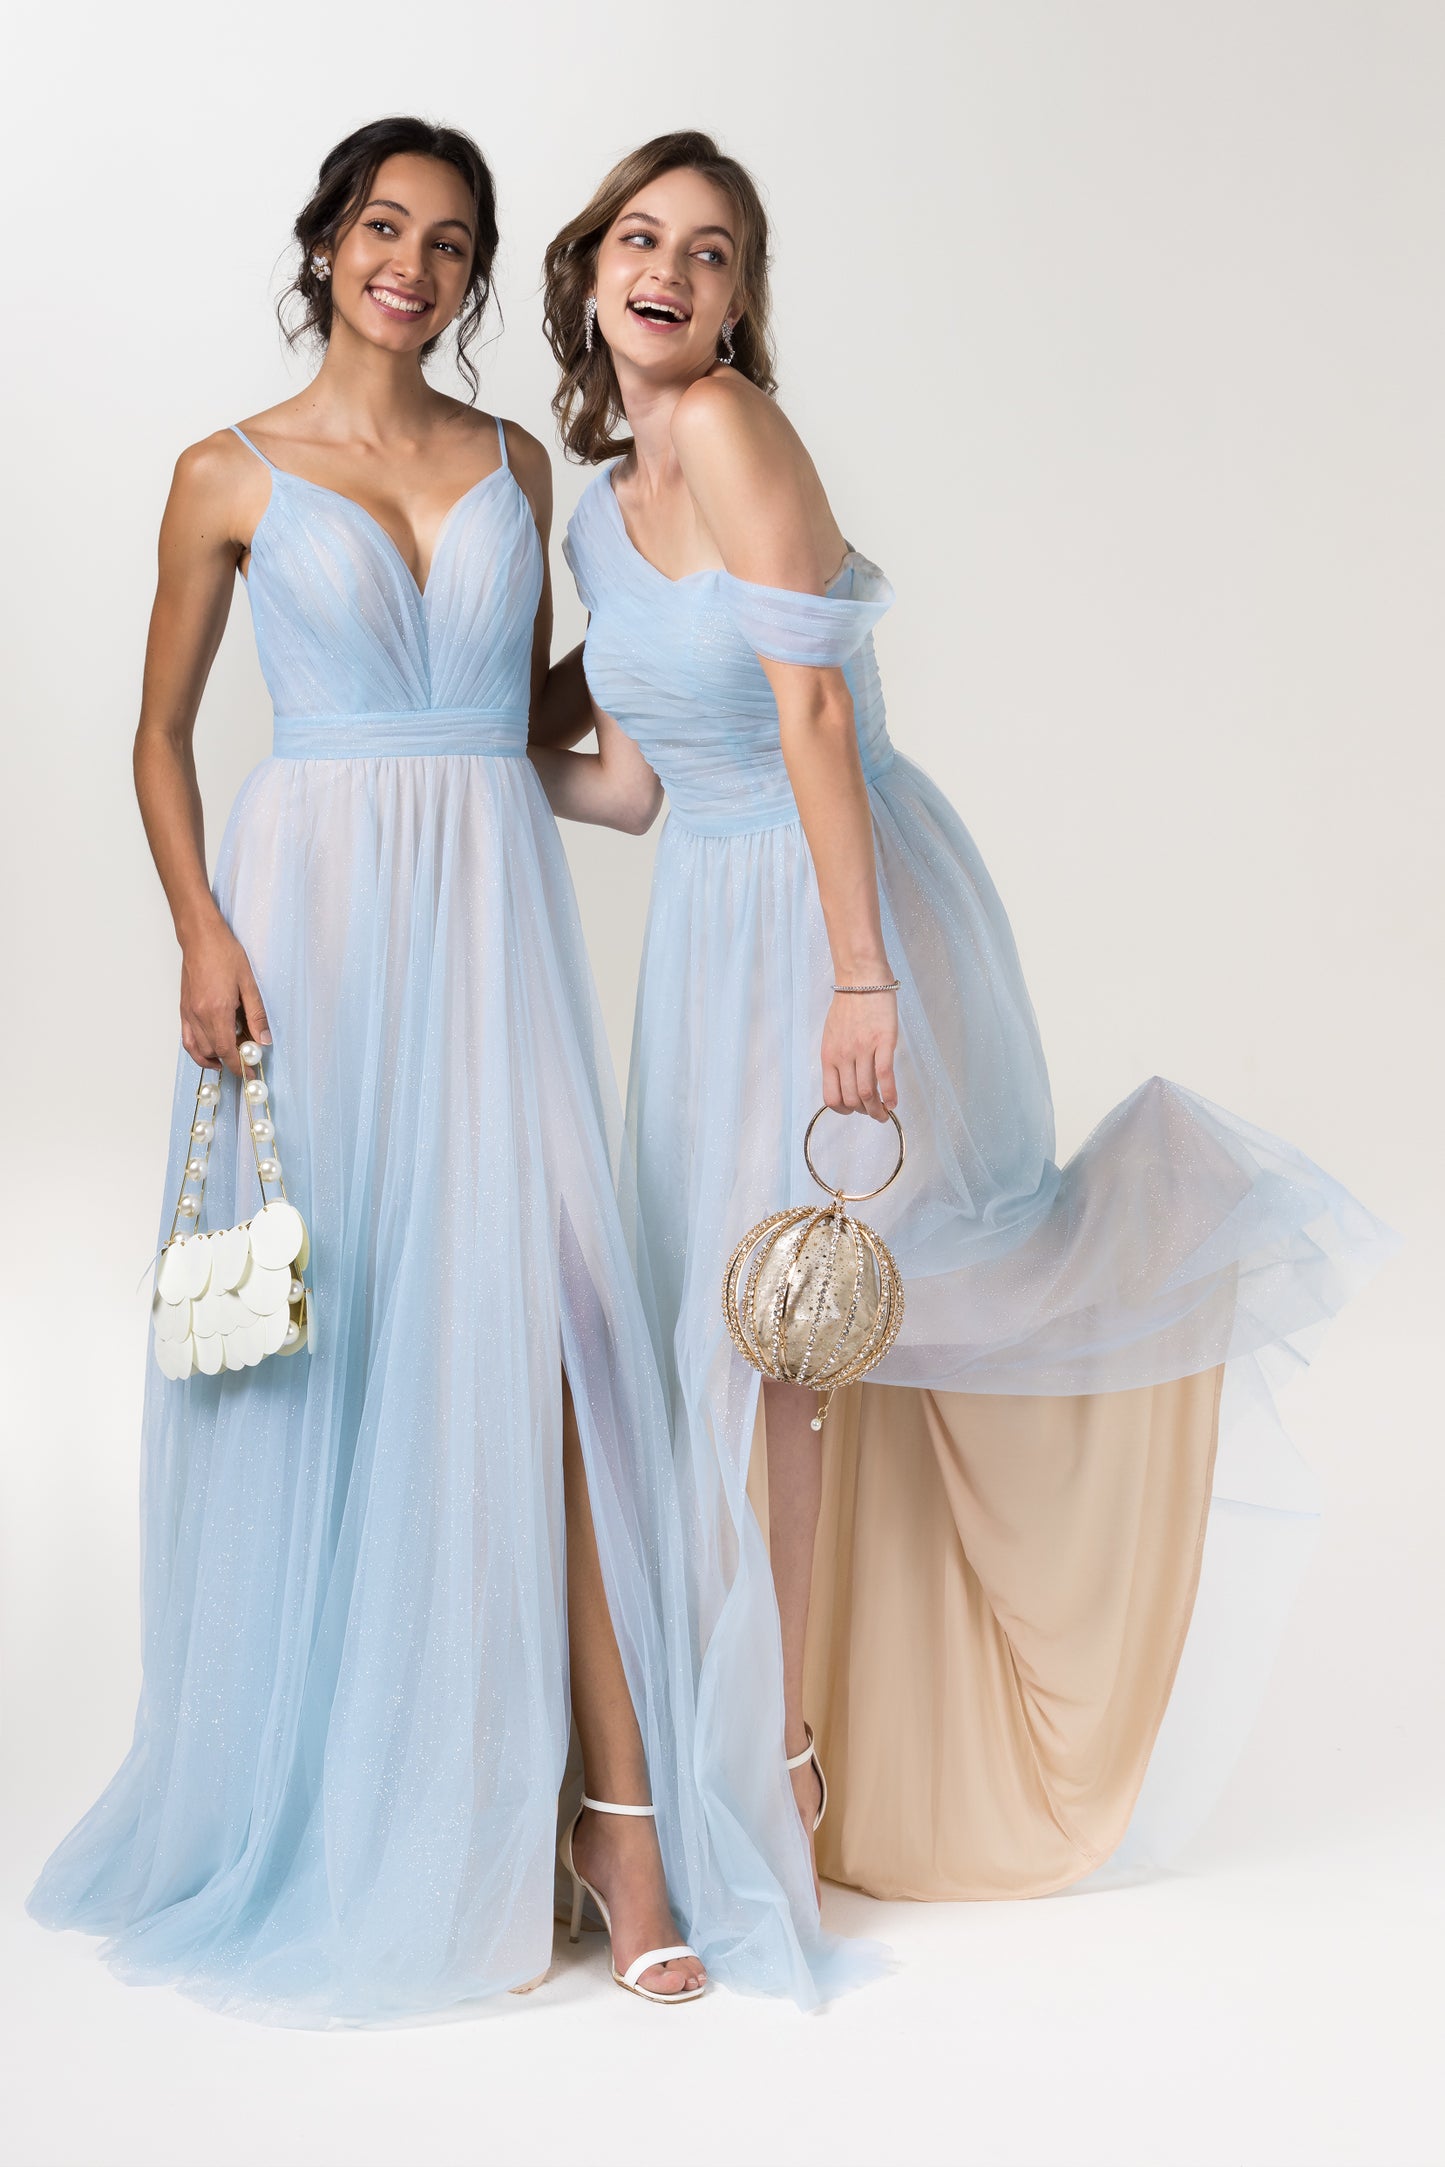 A-Line Floor Length Sparkling Tulle Bridesmaid Dress Formal Dresses CB0613